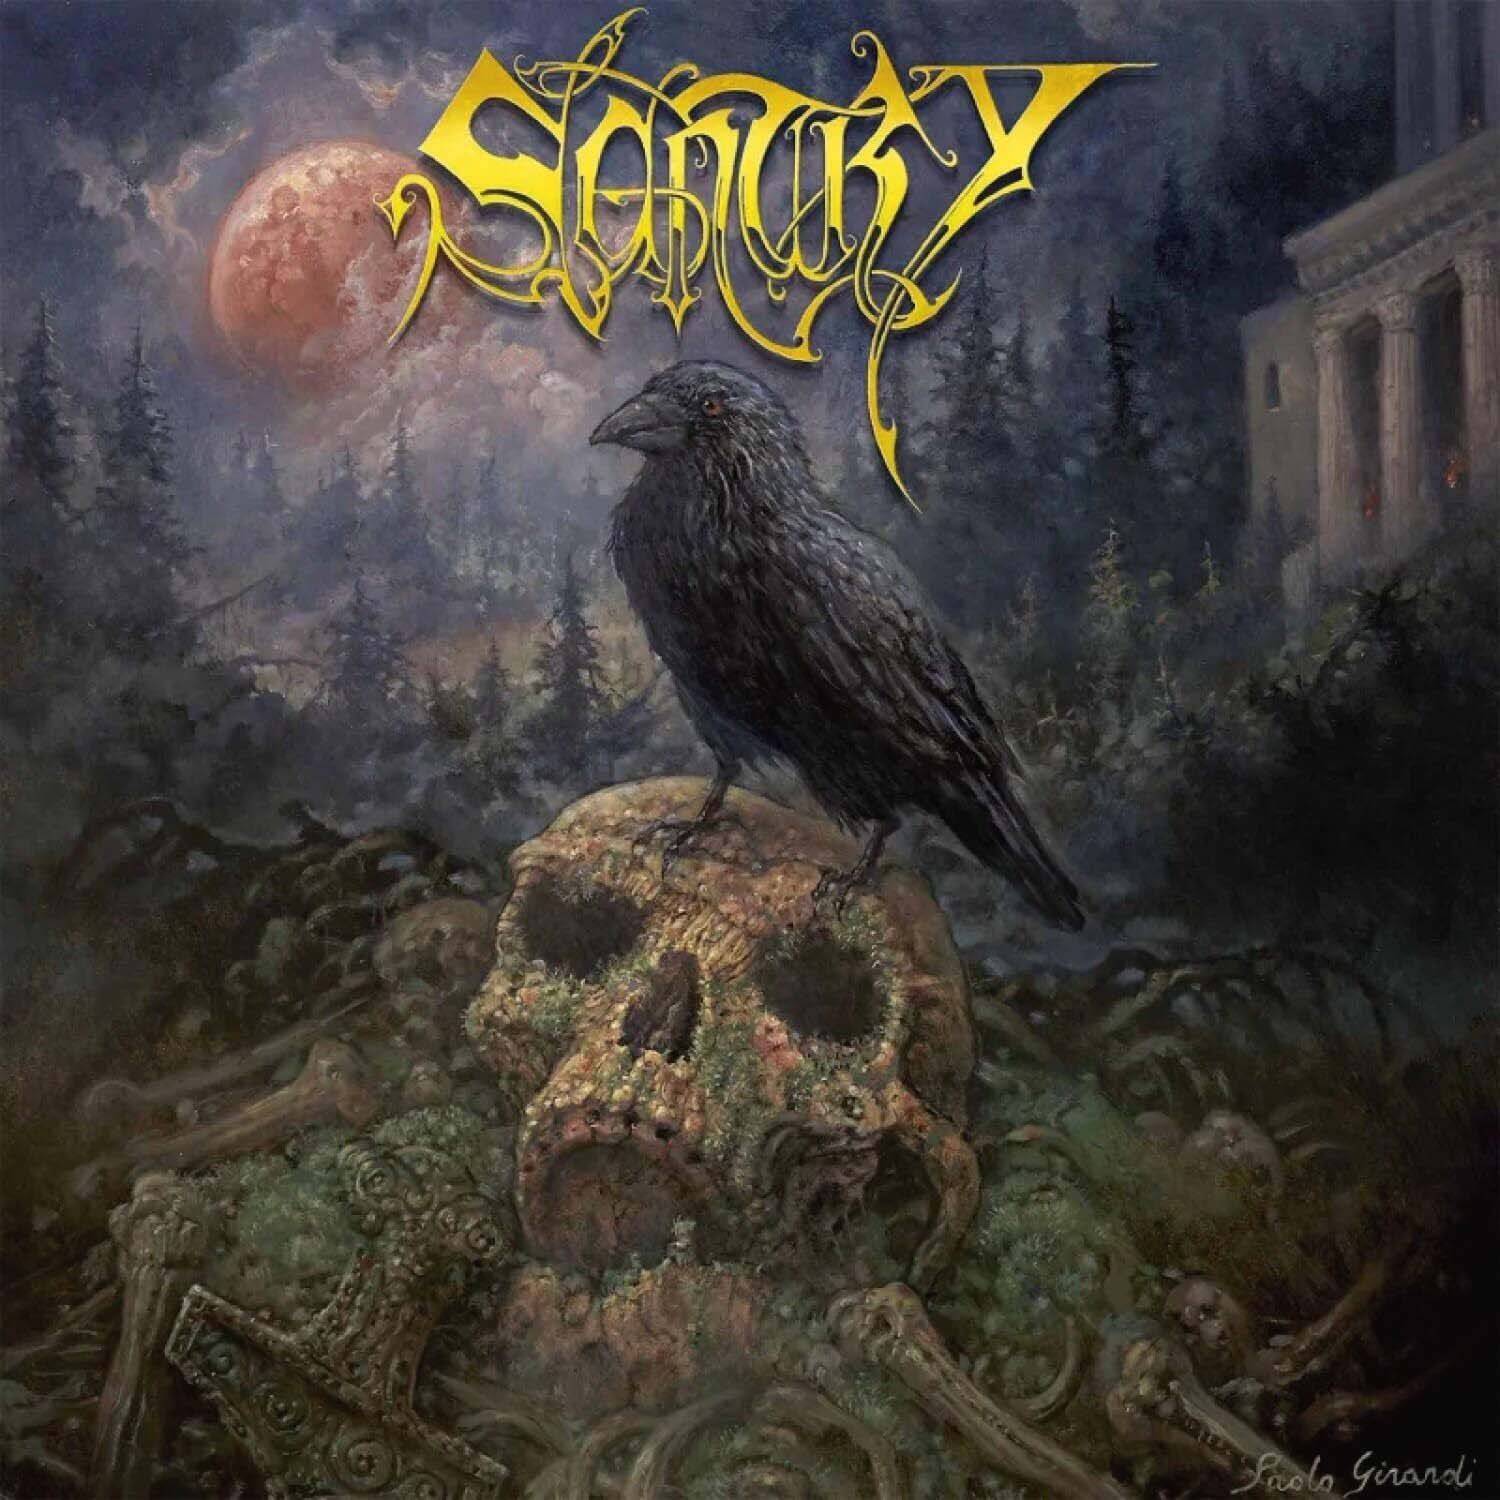 Sentry - Sentry